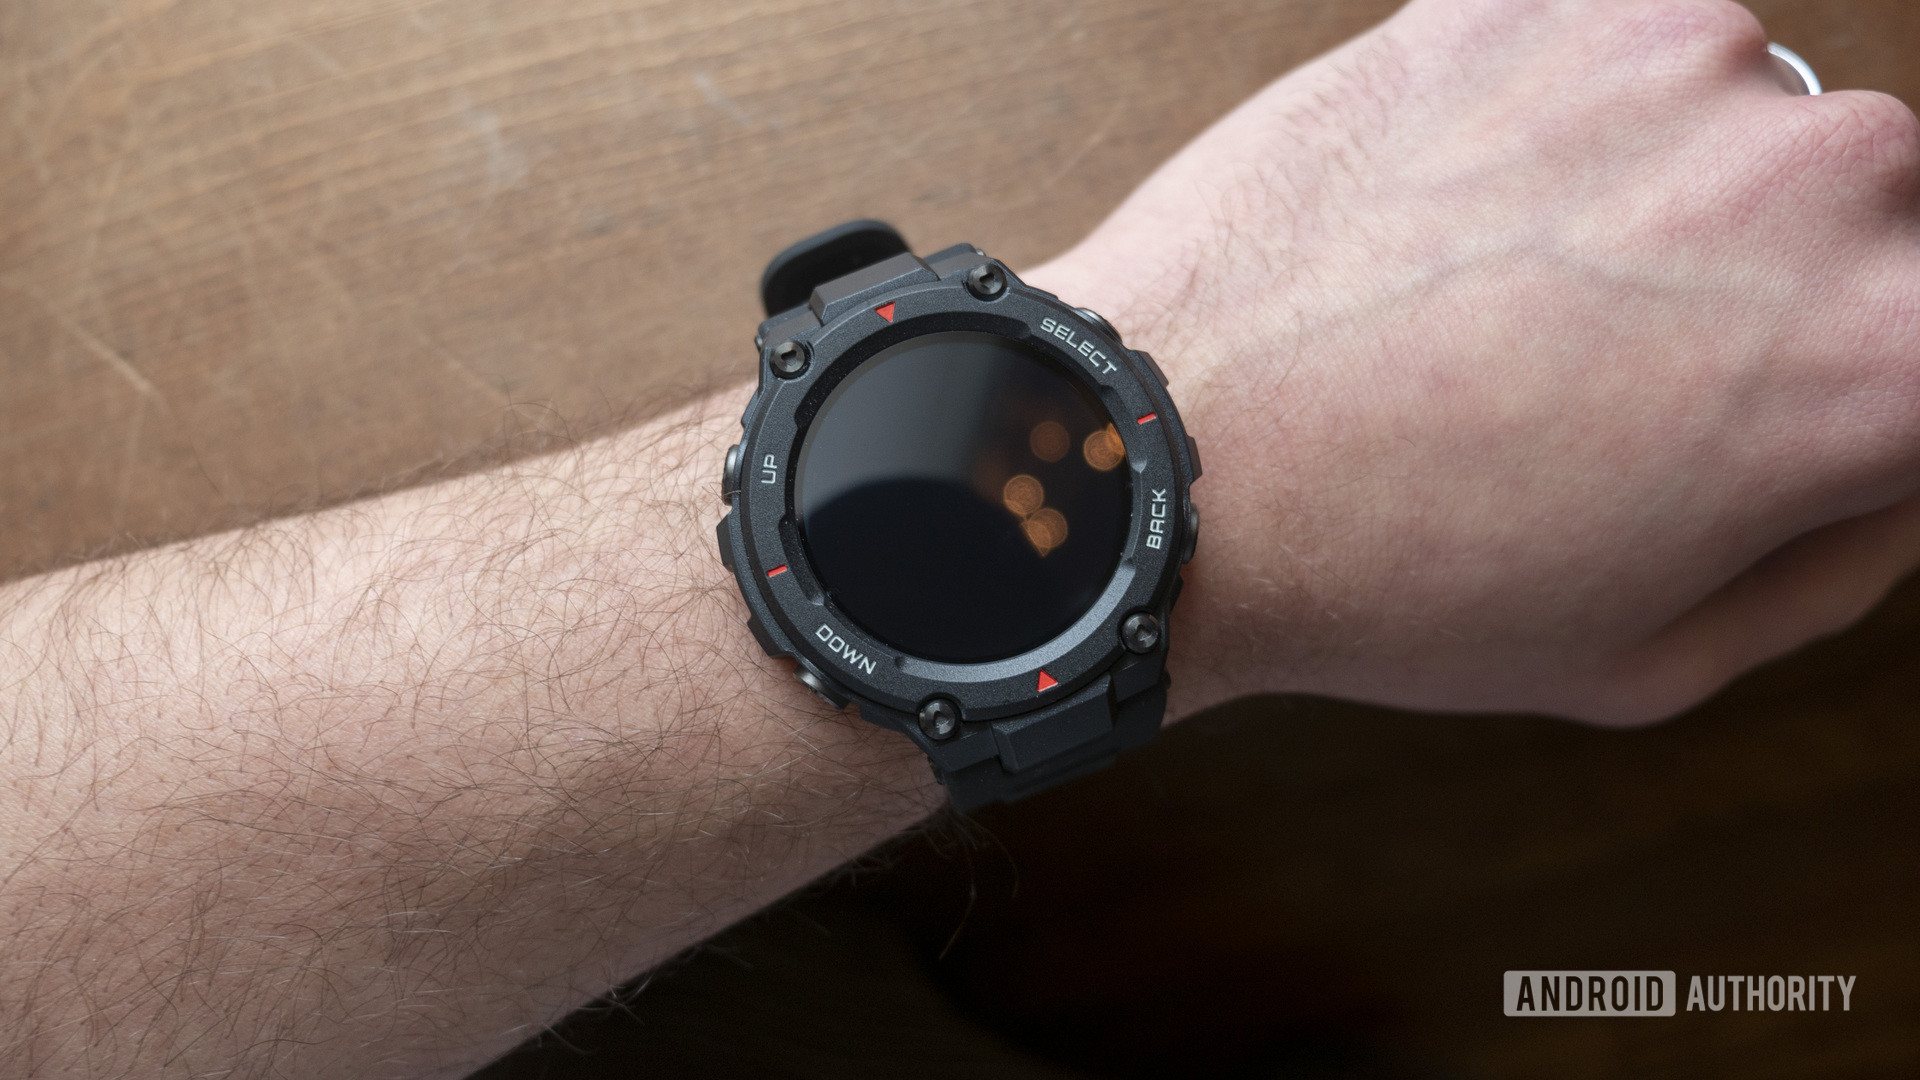 huami amazfit t rex smartwatch display screen off on wrist